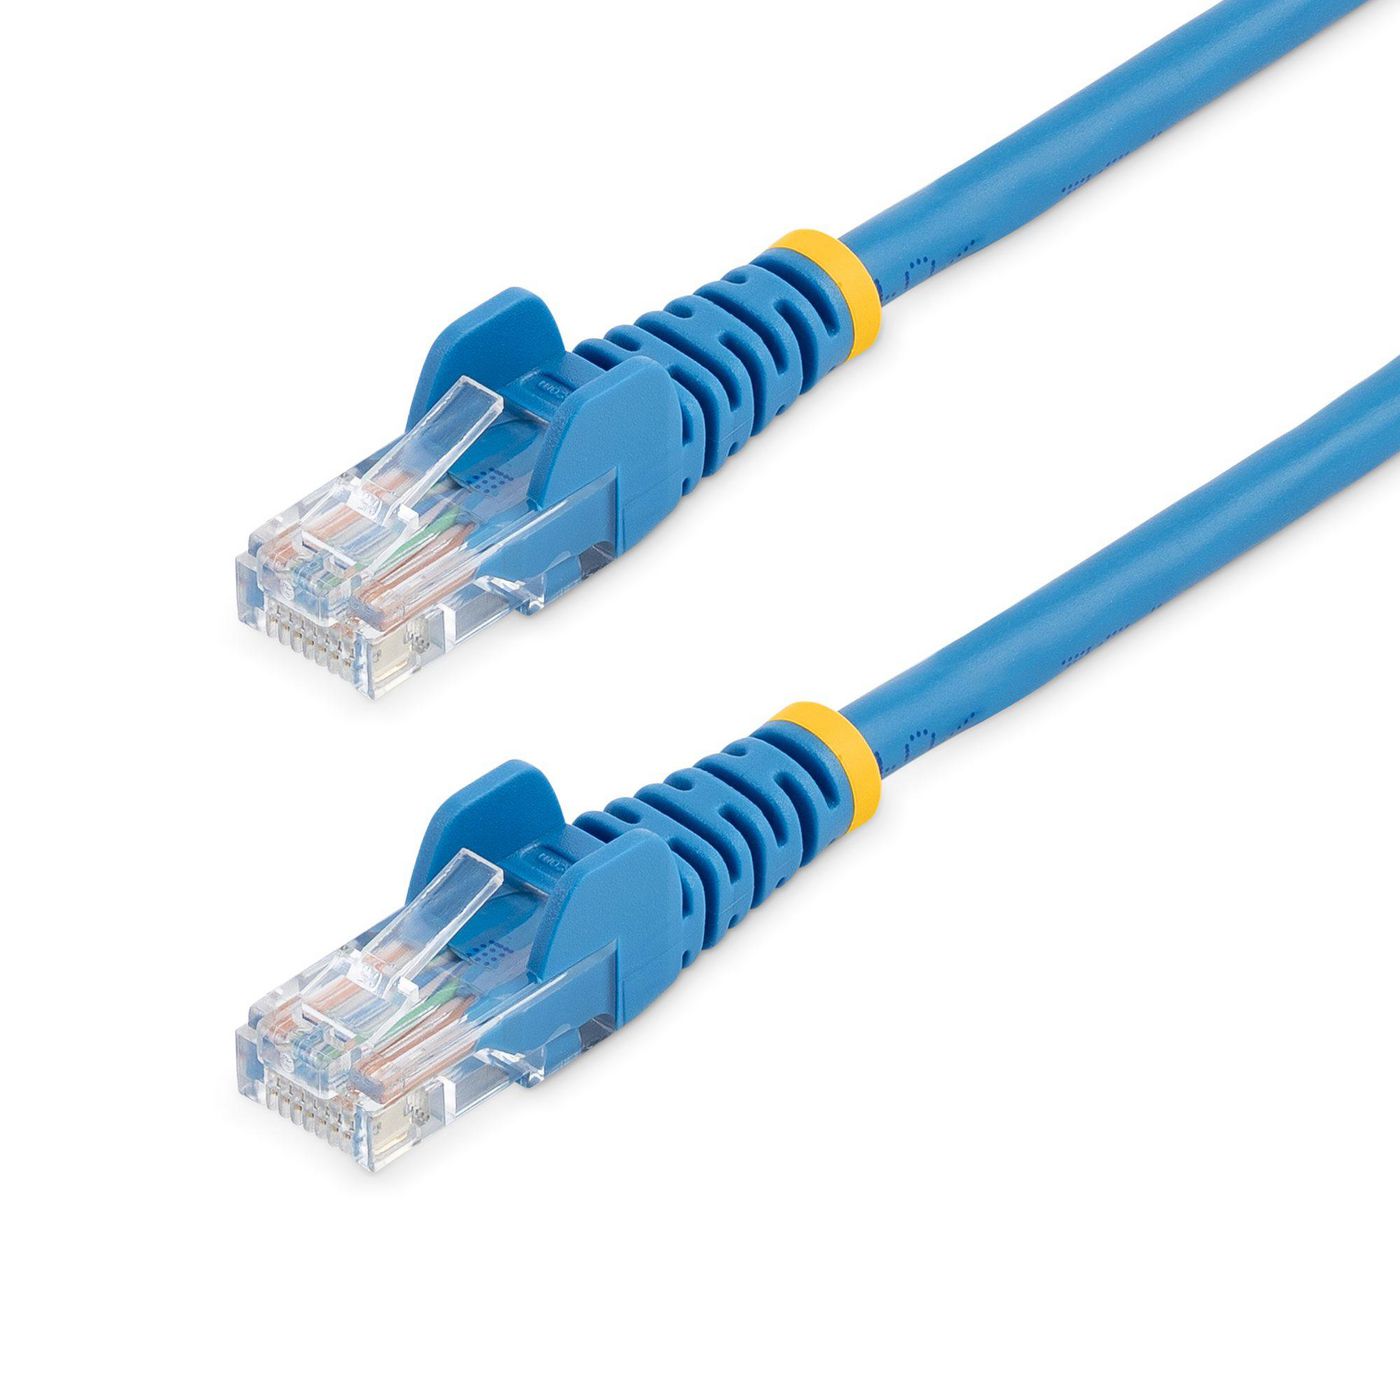 STARTECH.COM 0,5m Cat5e Ethernet Netzwerkkabel Snagless mit RJ45 - Cat 5e UTP Kabel - Blau